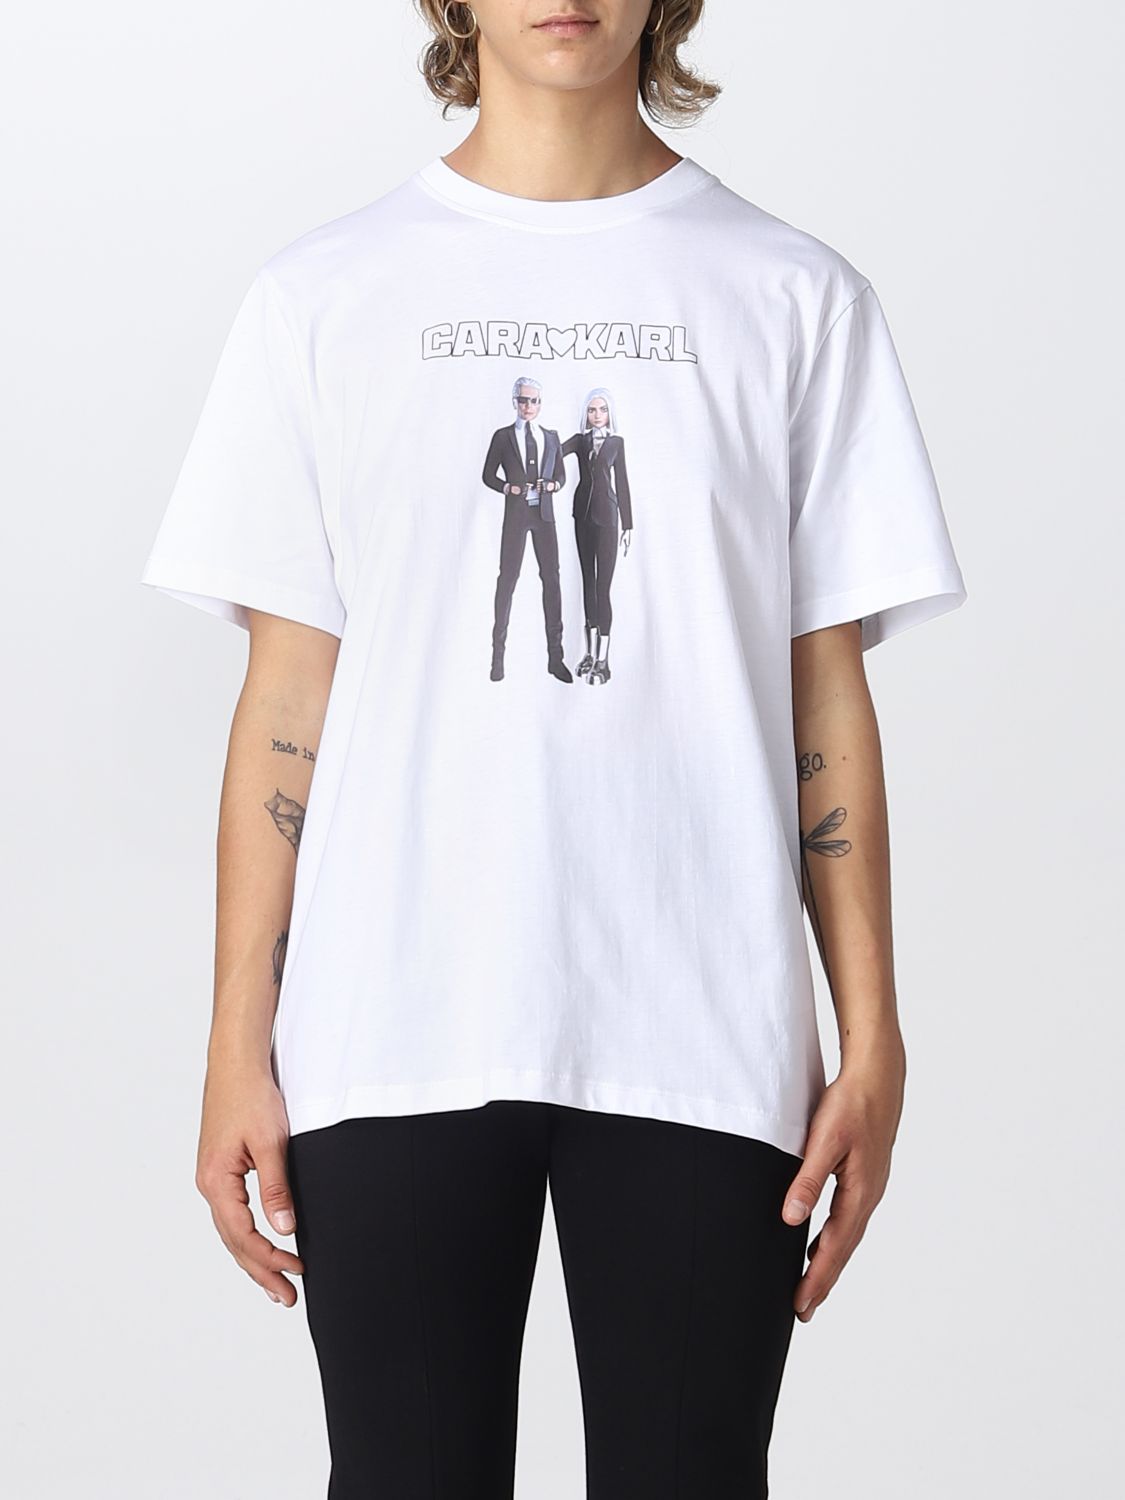 Karl Lagerfeld T-shirt  Woman Color White